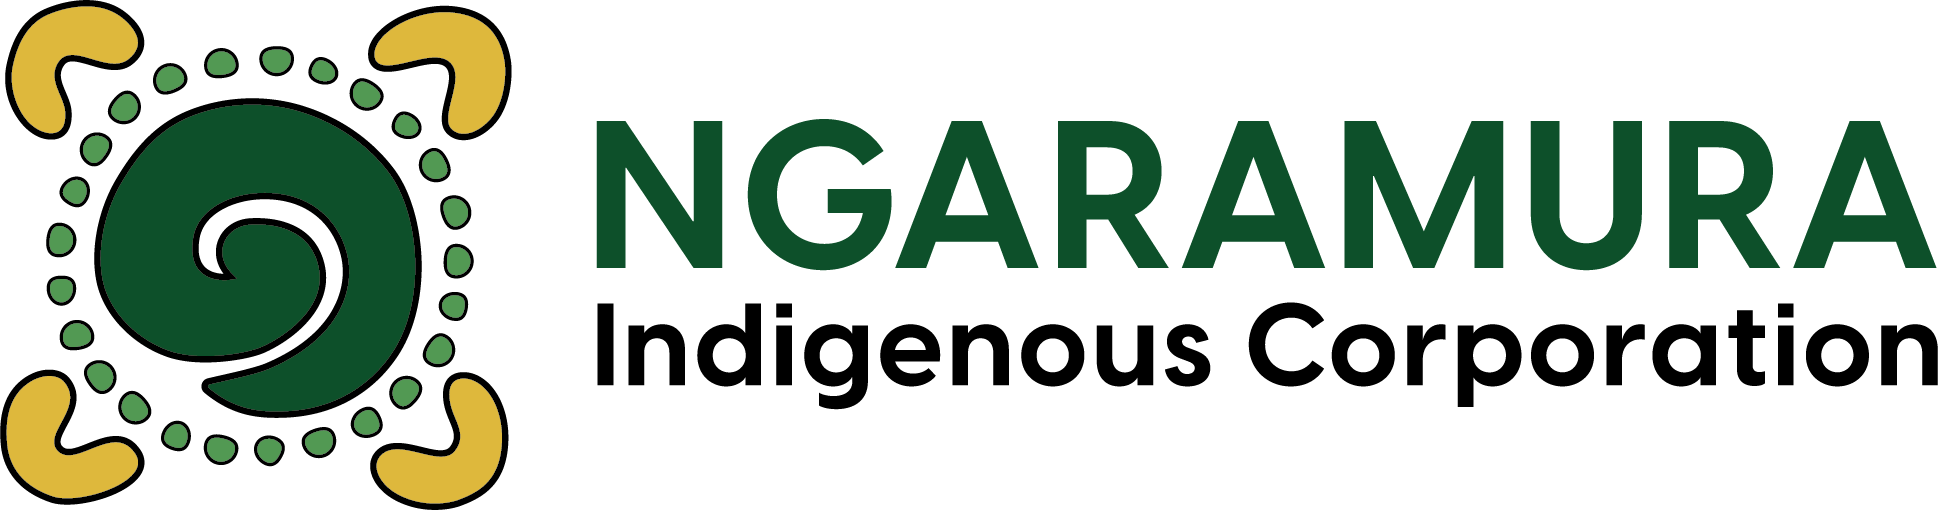 Ngaramura logo